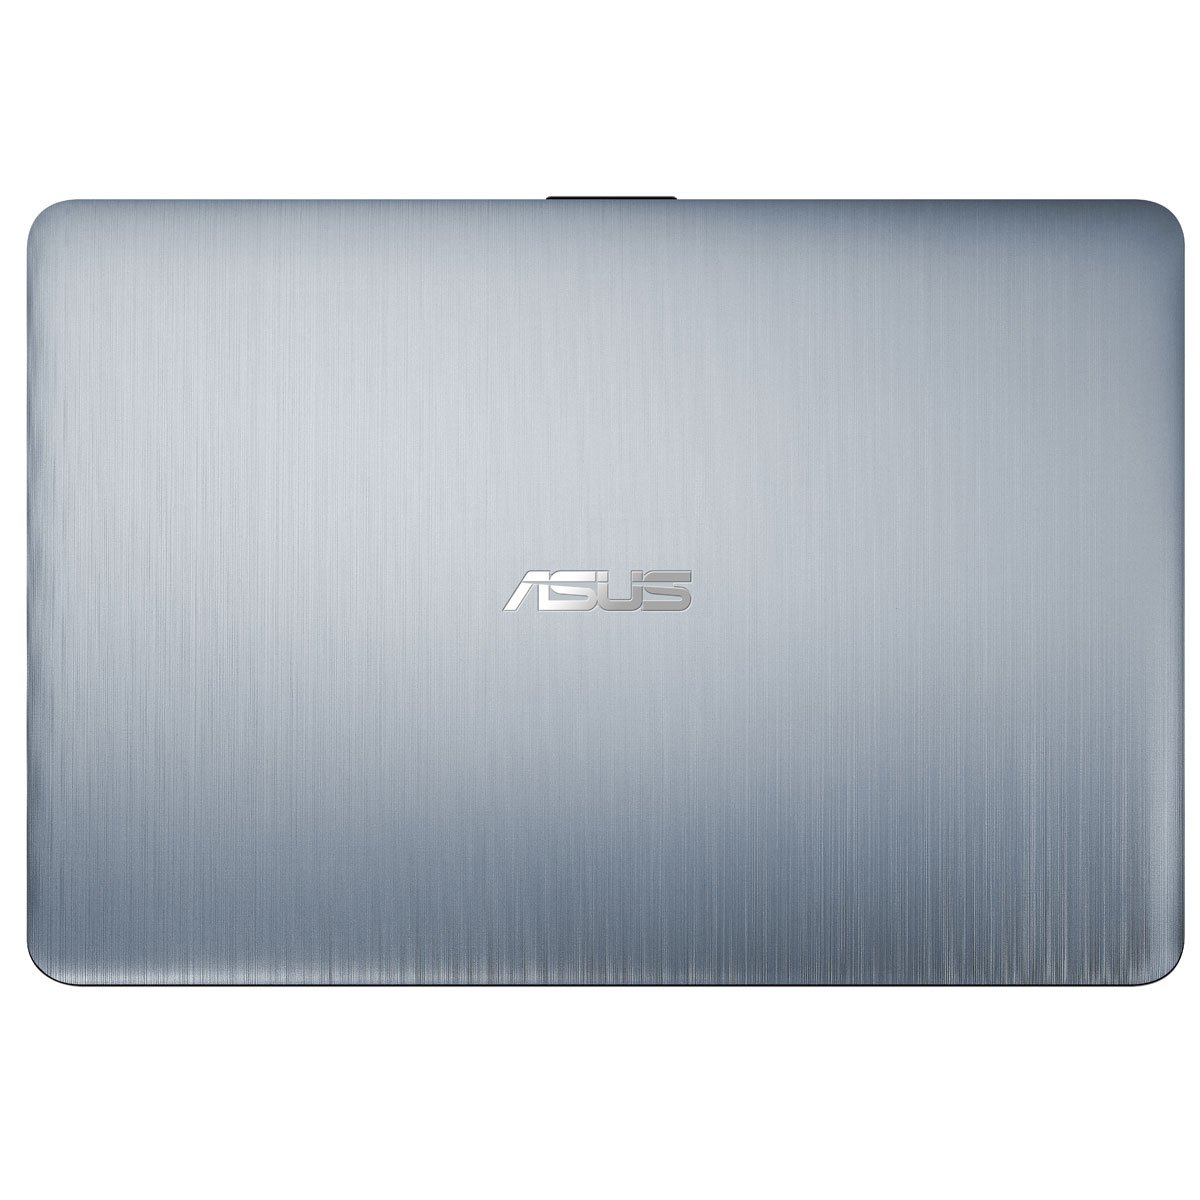 Laptop Asus Vivo Book Max X441Ua-Wx086T